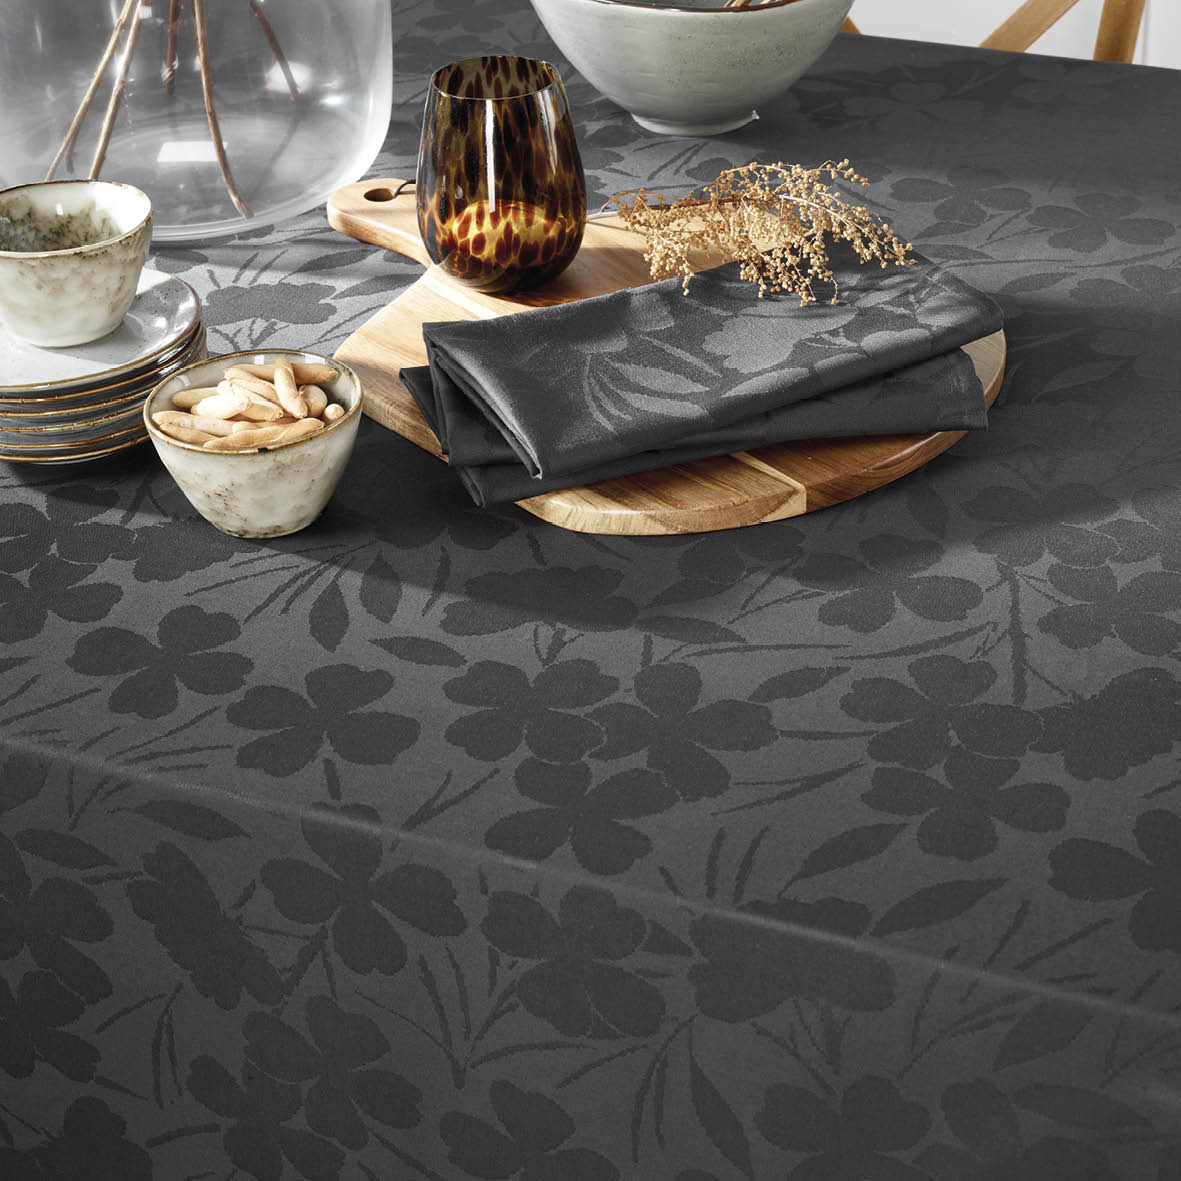 Tablecloth - Jacquard woven - Petites Fleurs dark grey